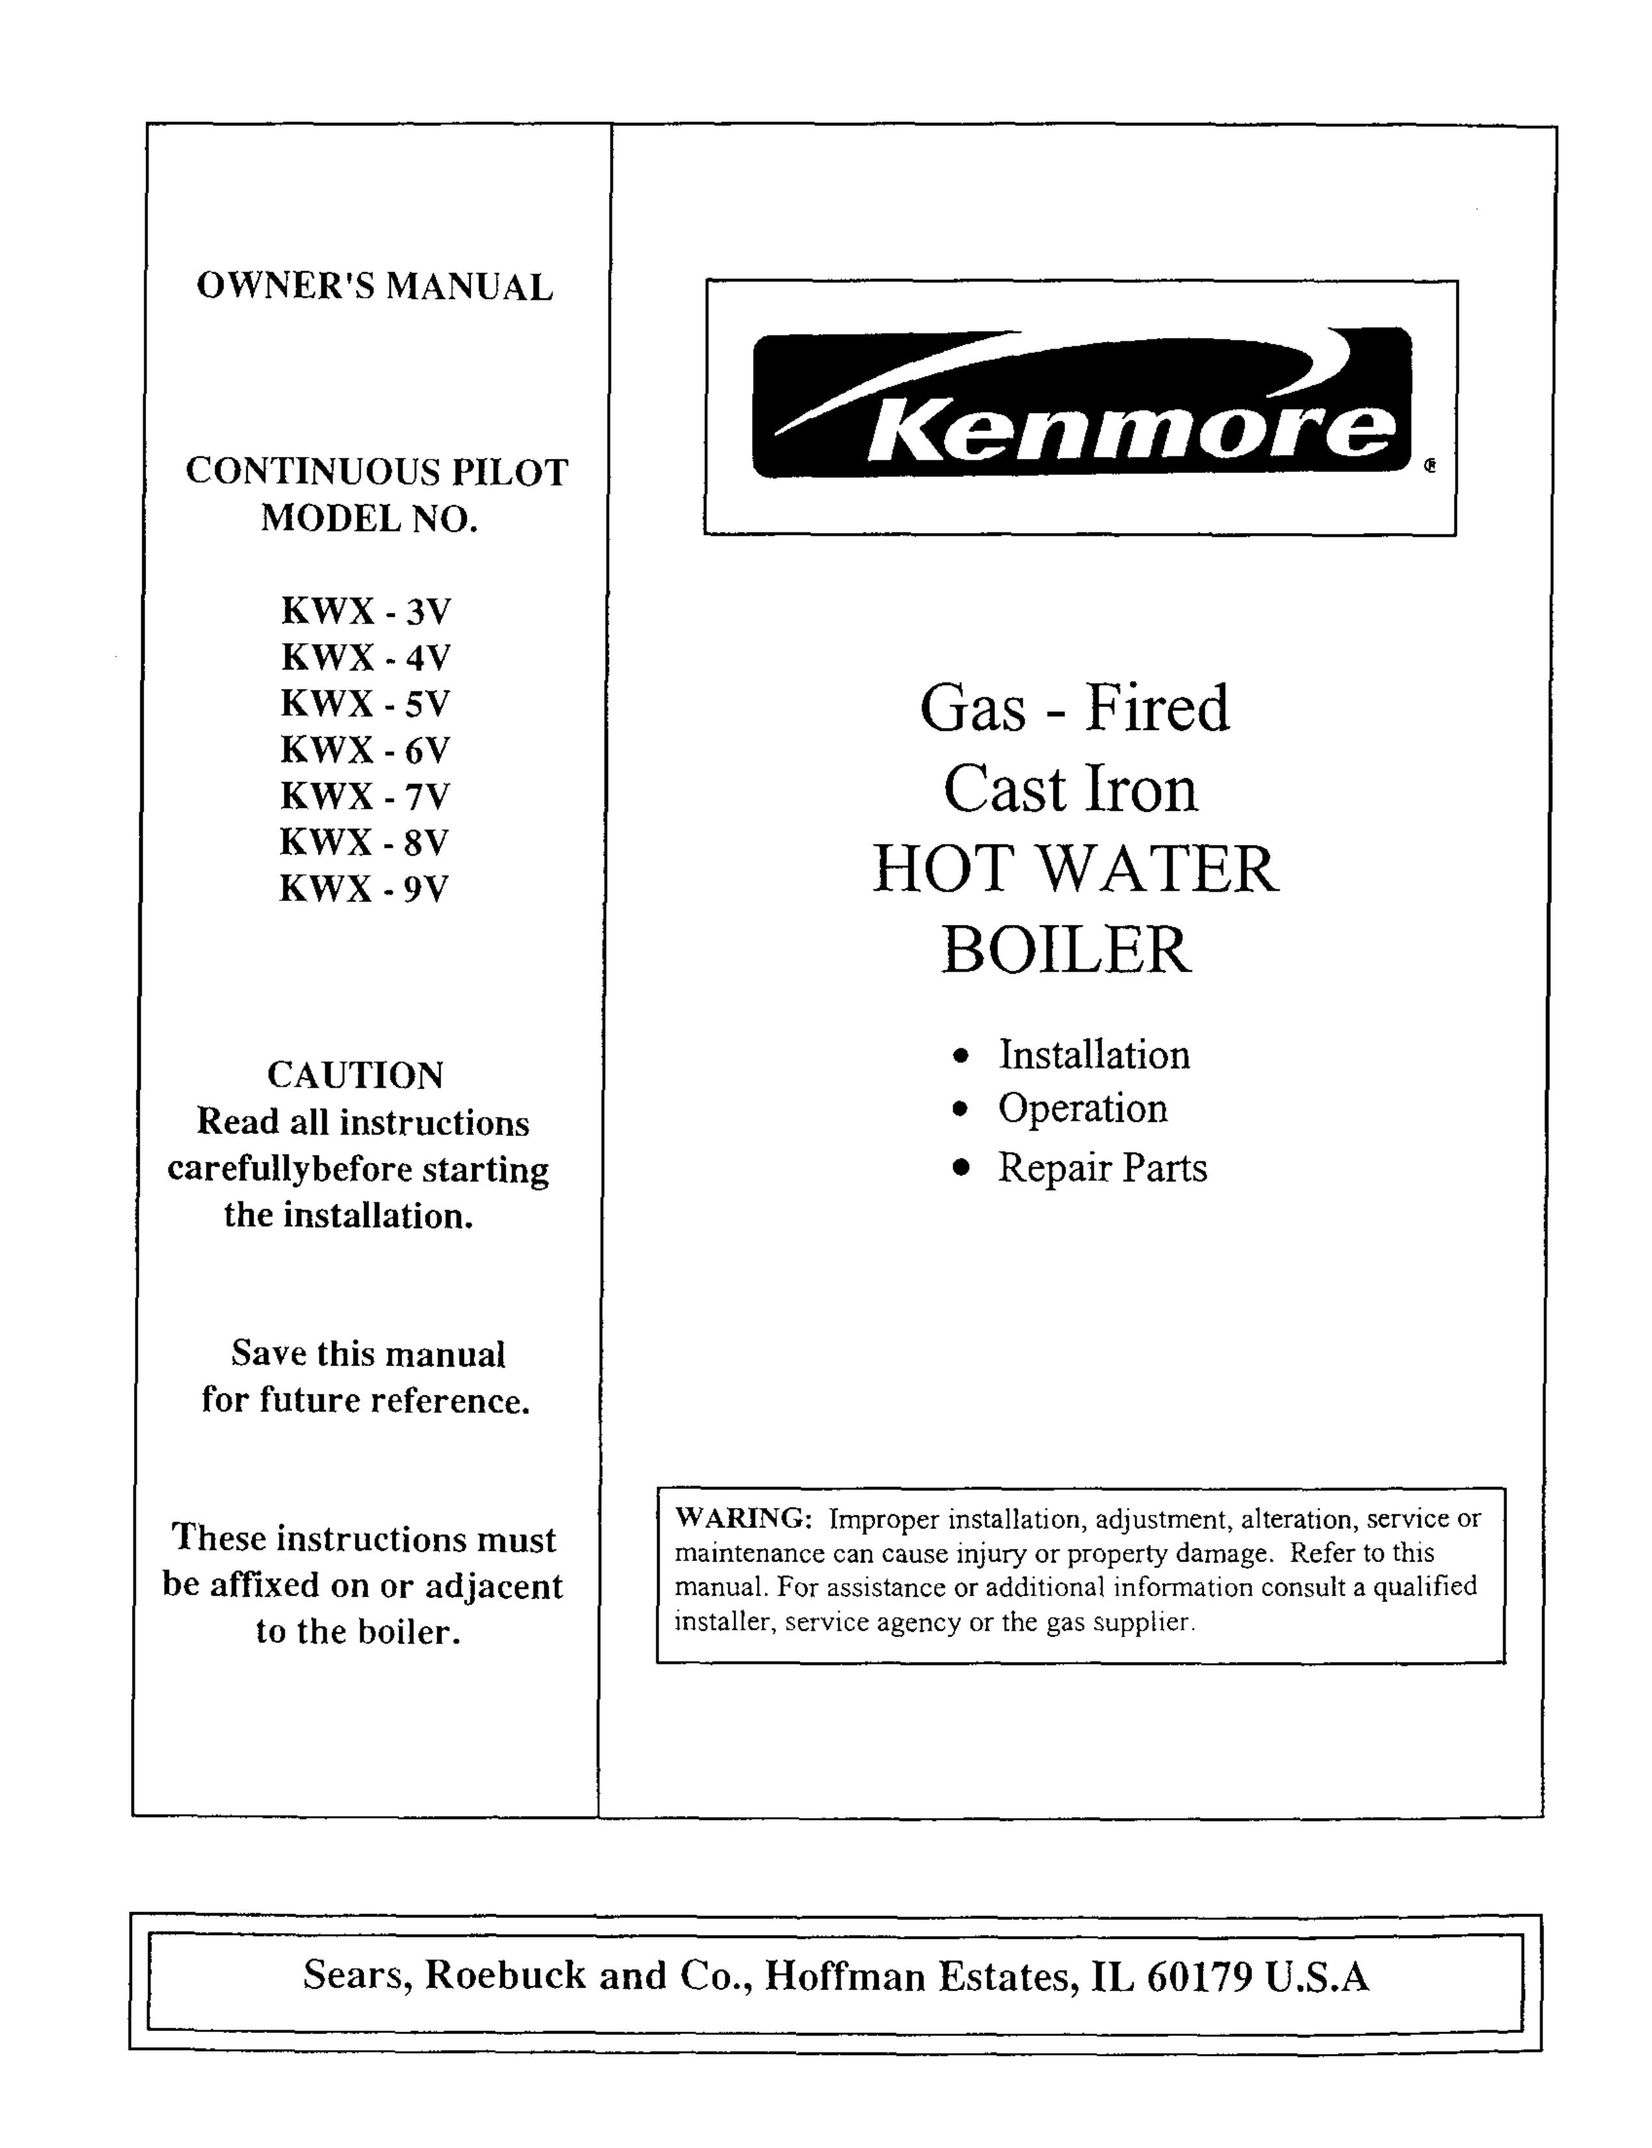 Kenmore KWX - 3V Boiler User Manual